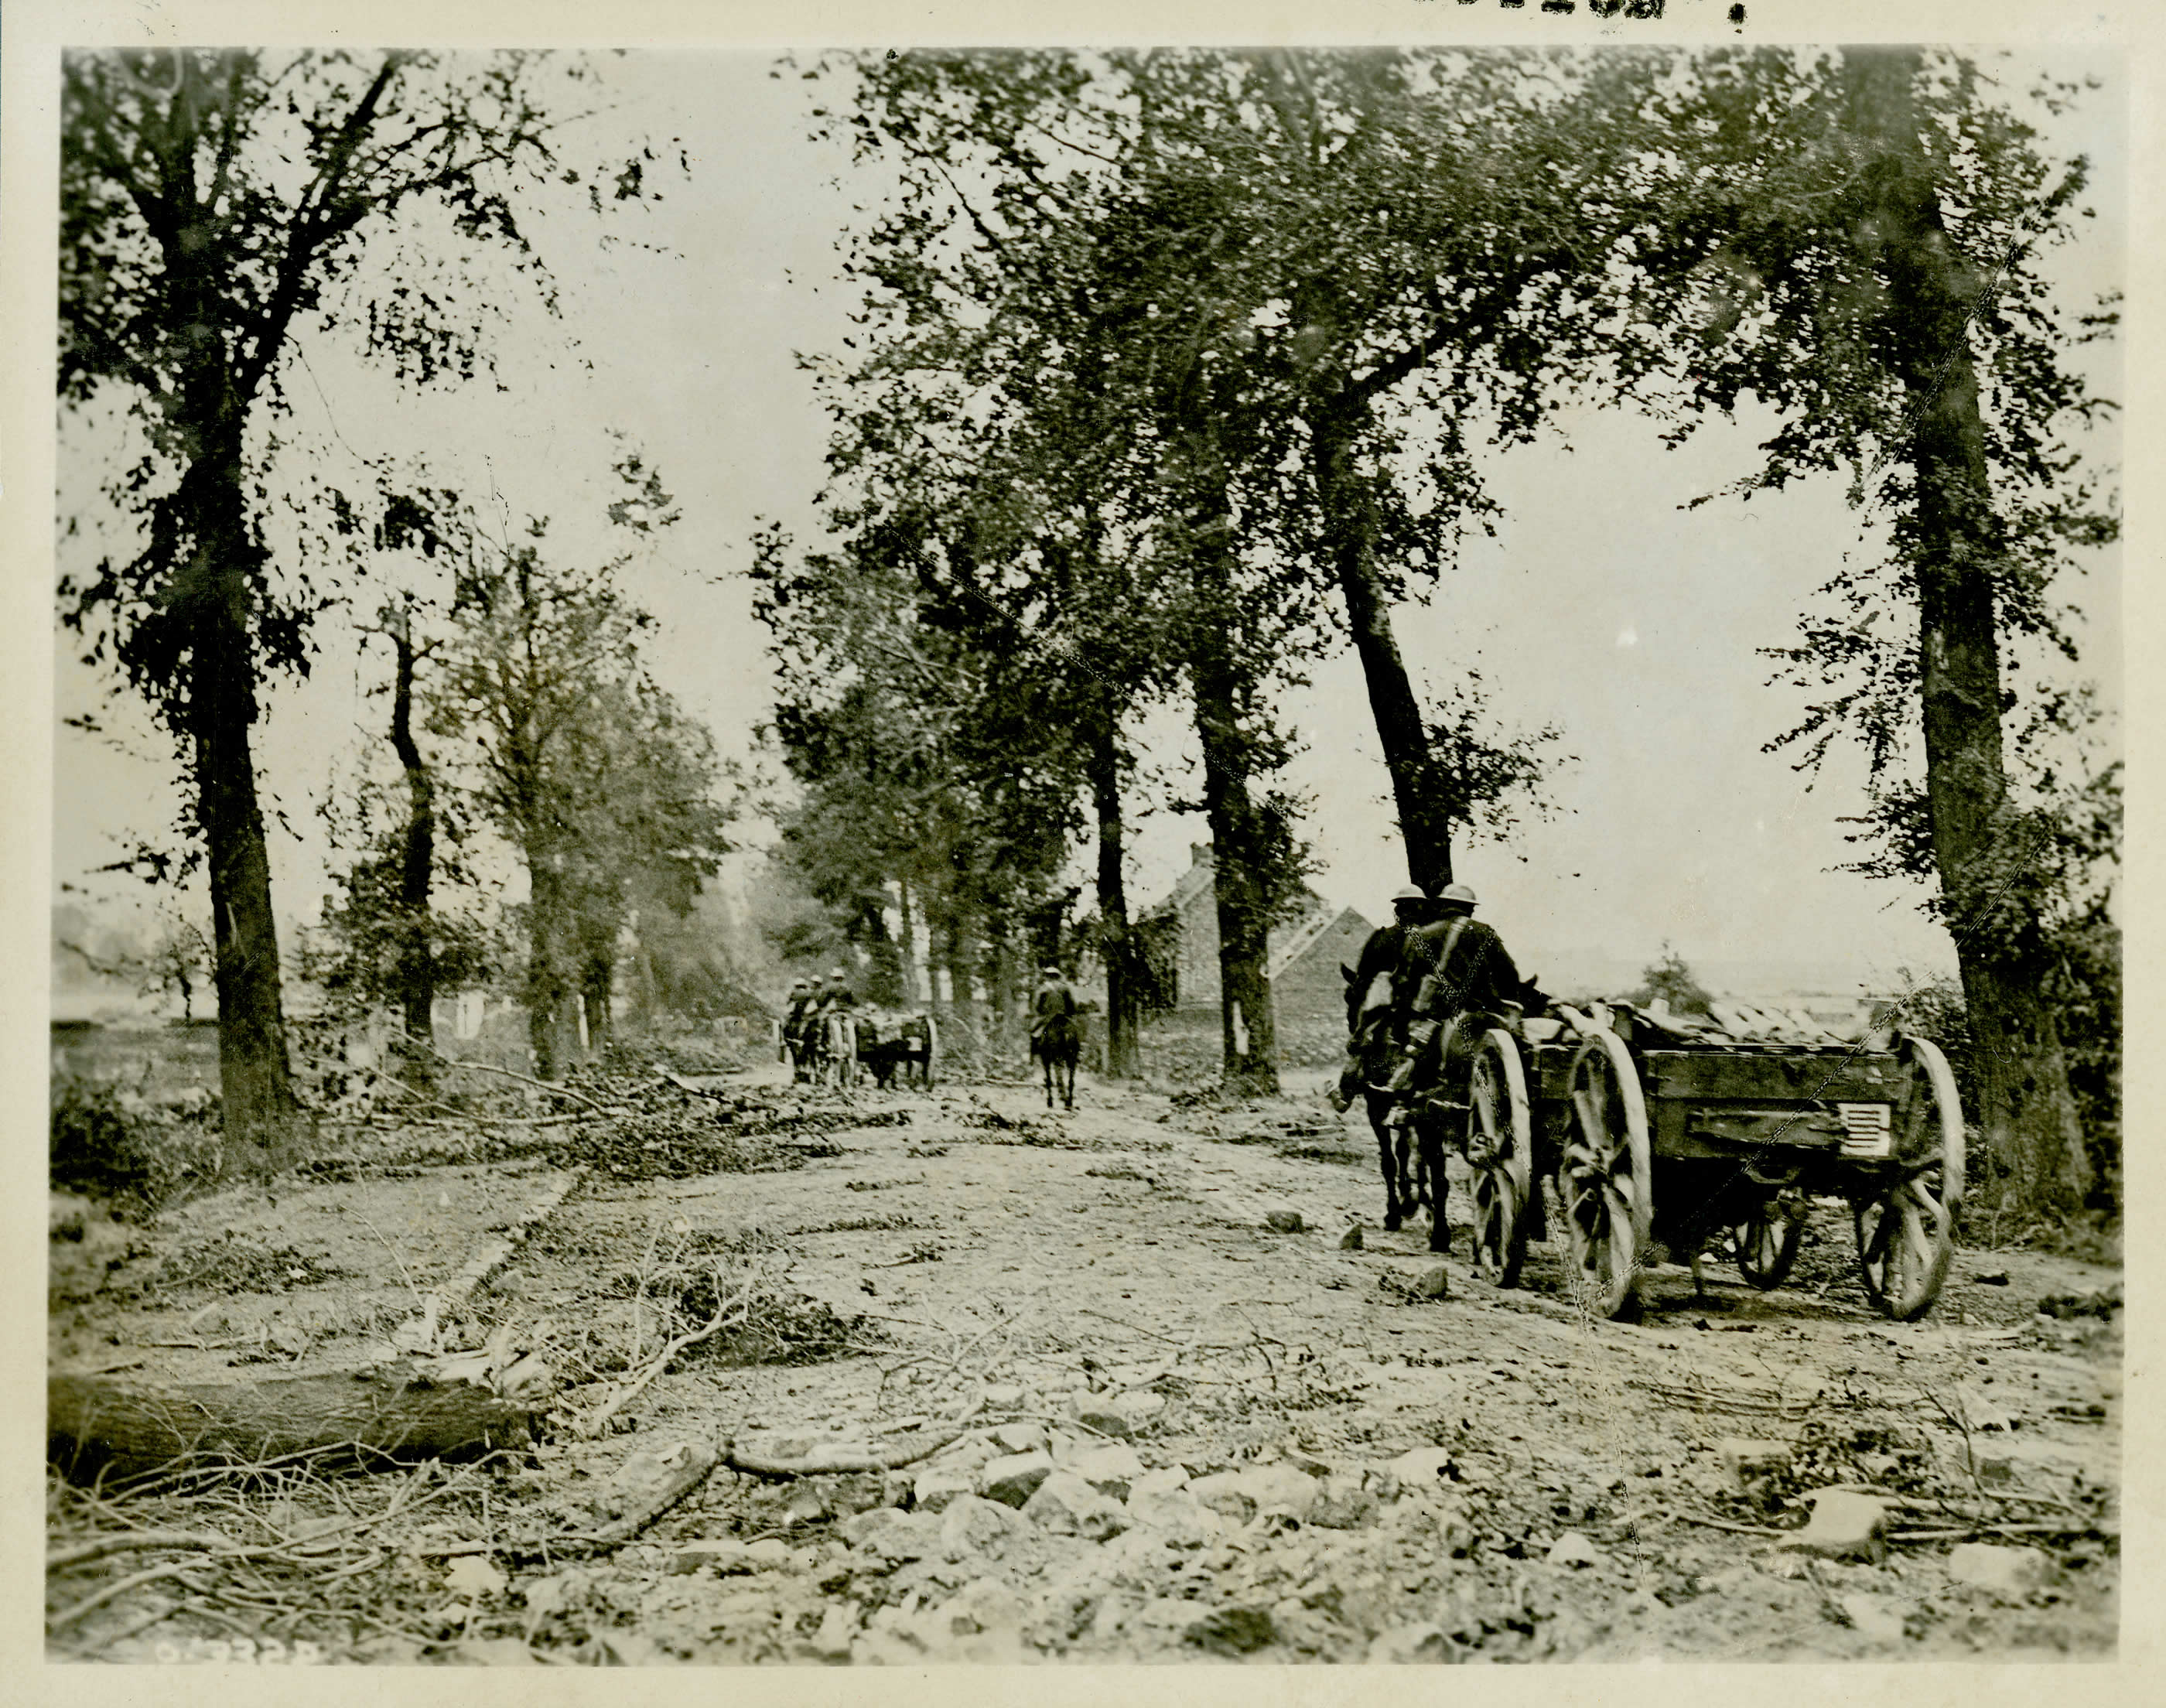 The Arras-Cambrai Road